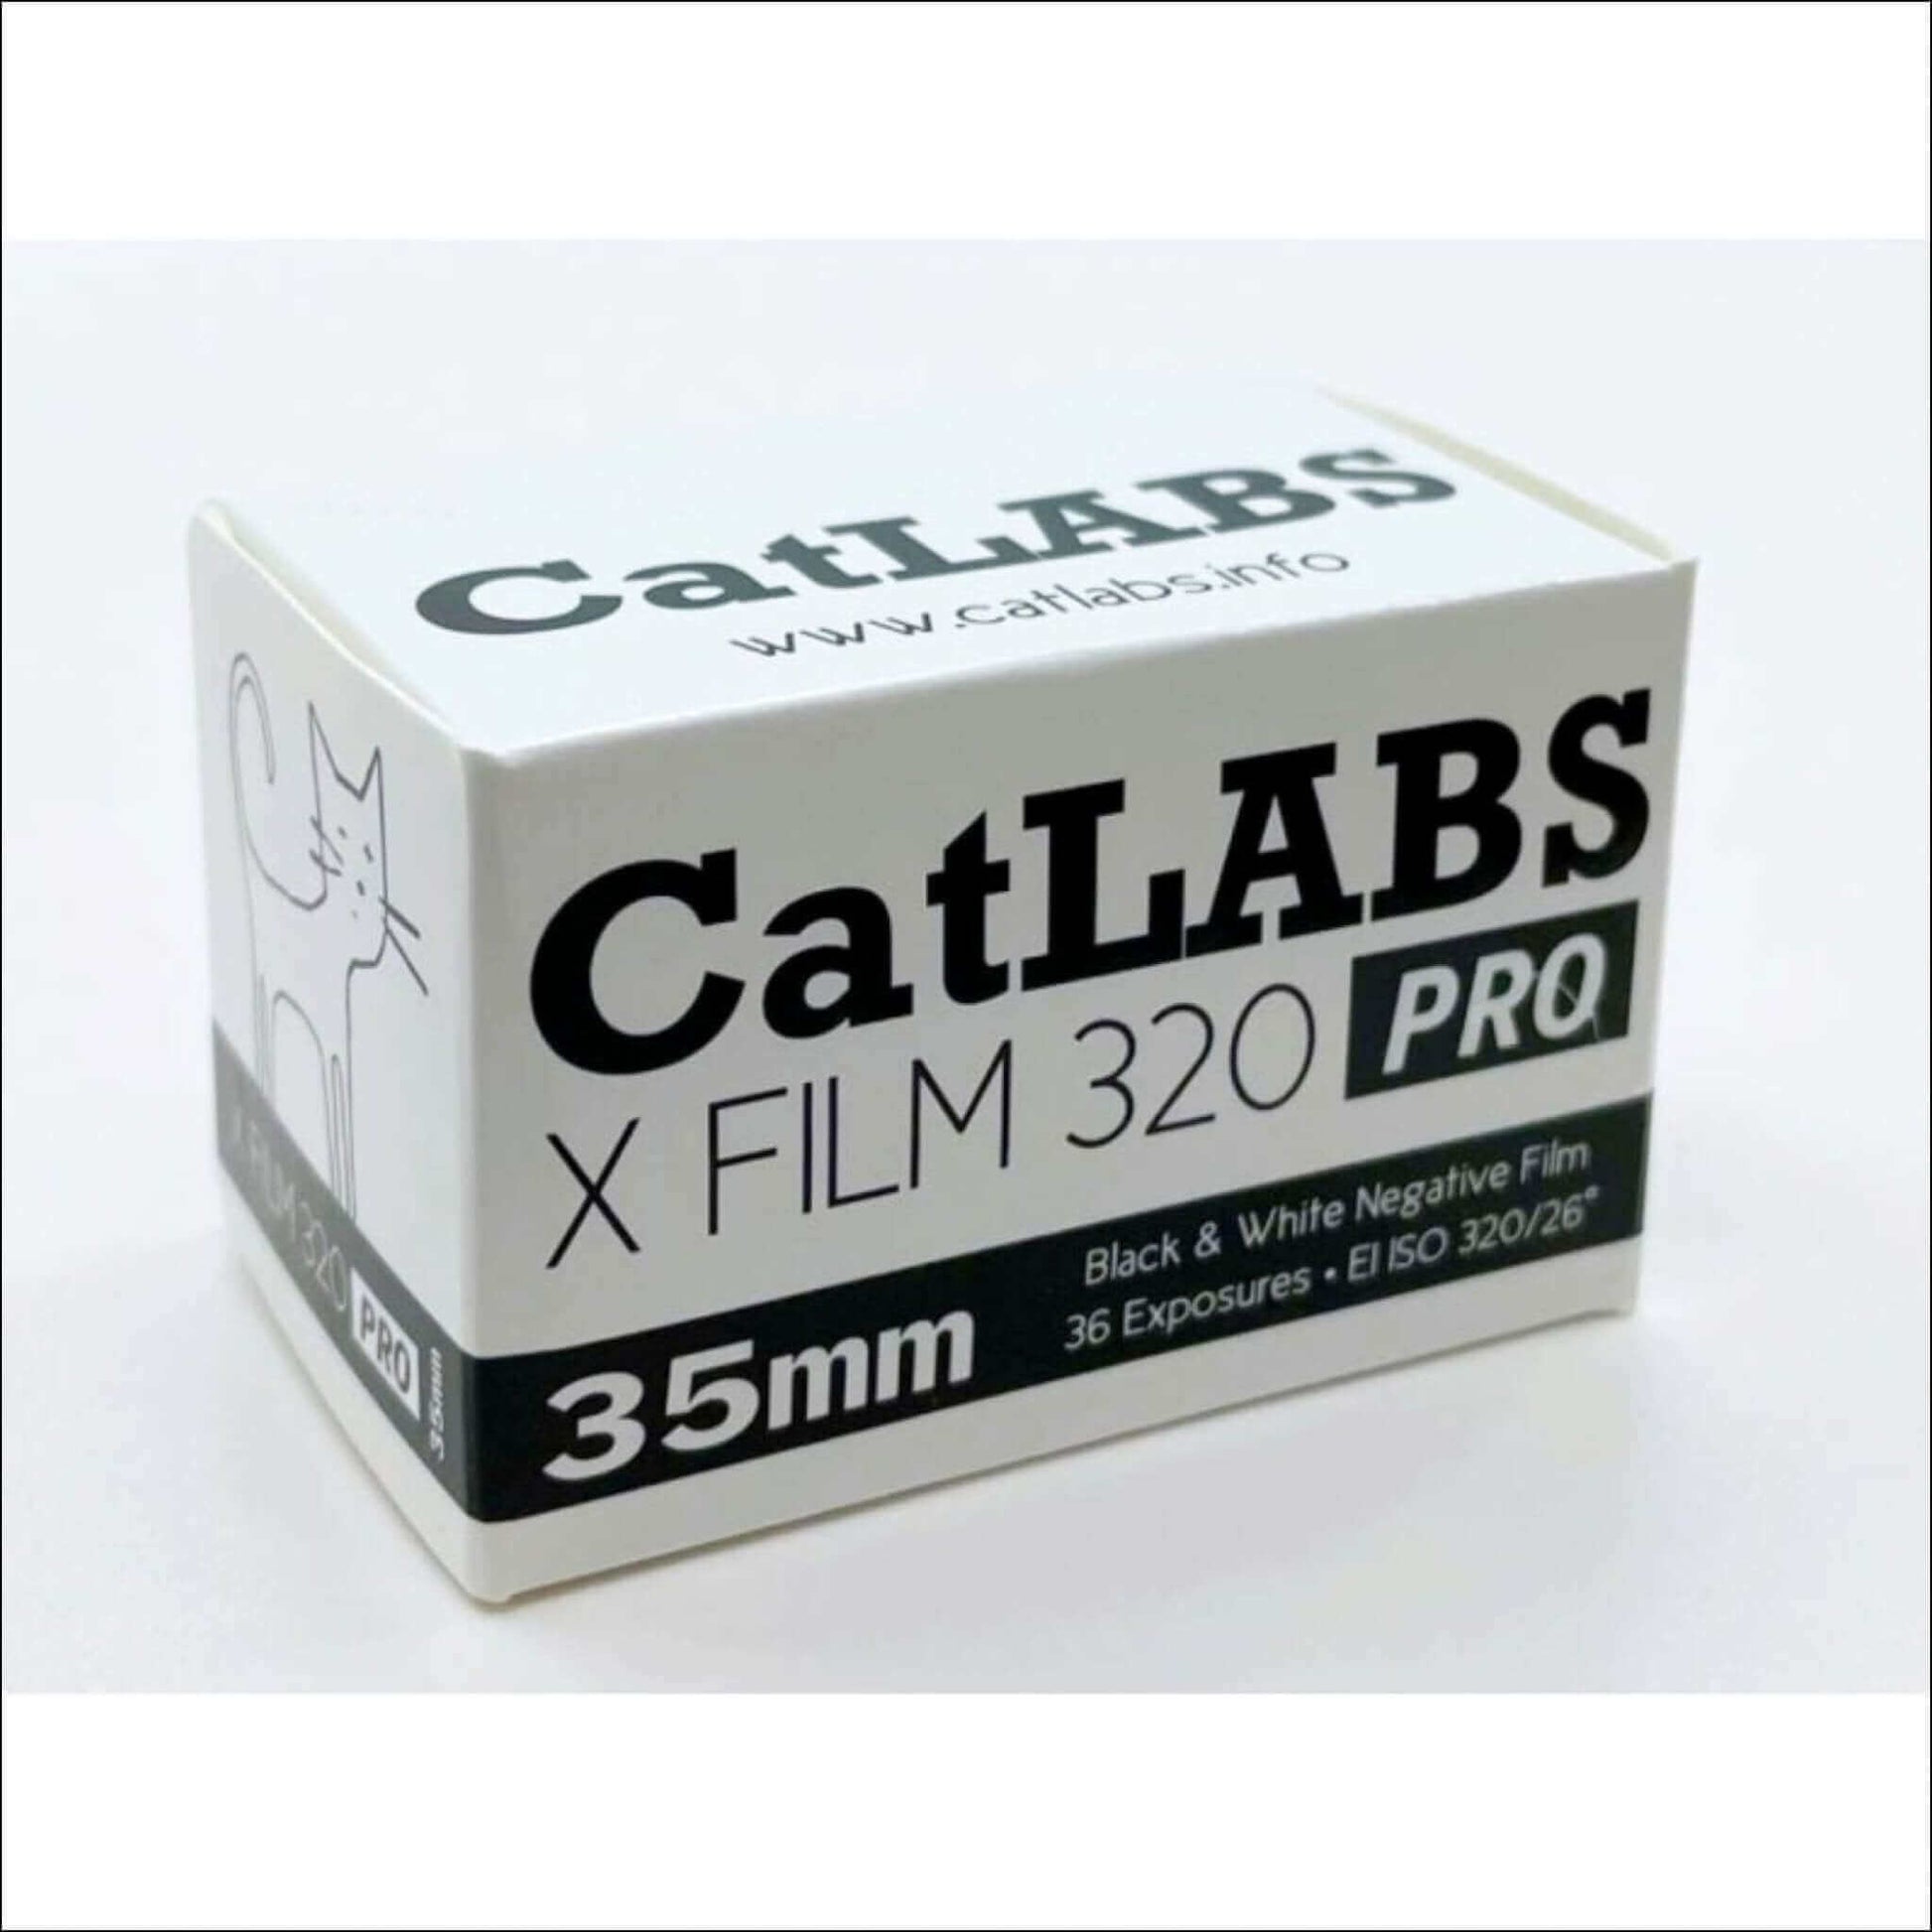 Catlabs x Film 320 Pro Bw 35mm Film 36 Exposures